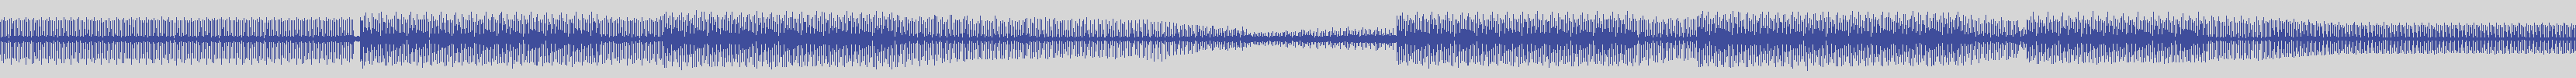 nf_boyz_records [NFY012] Fernandez Alfonso Nunez - Timbal Caliente [Original Mix] audio wave form